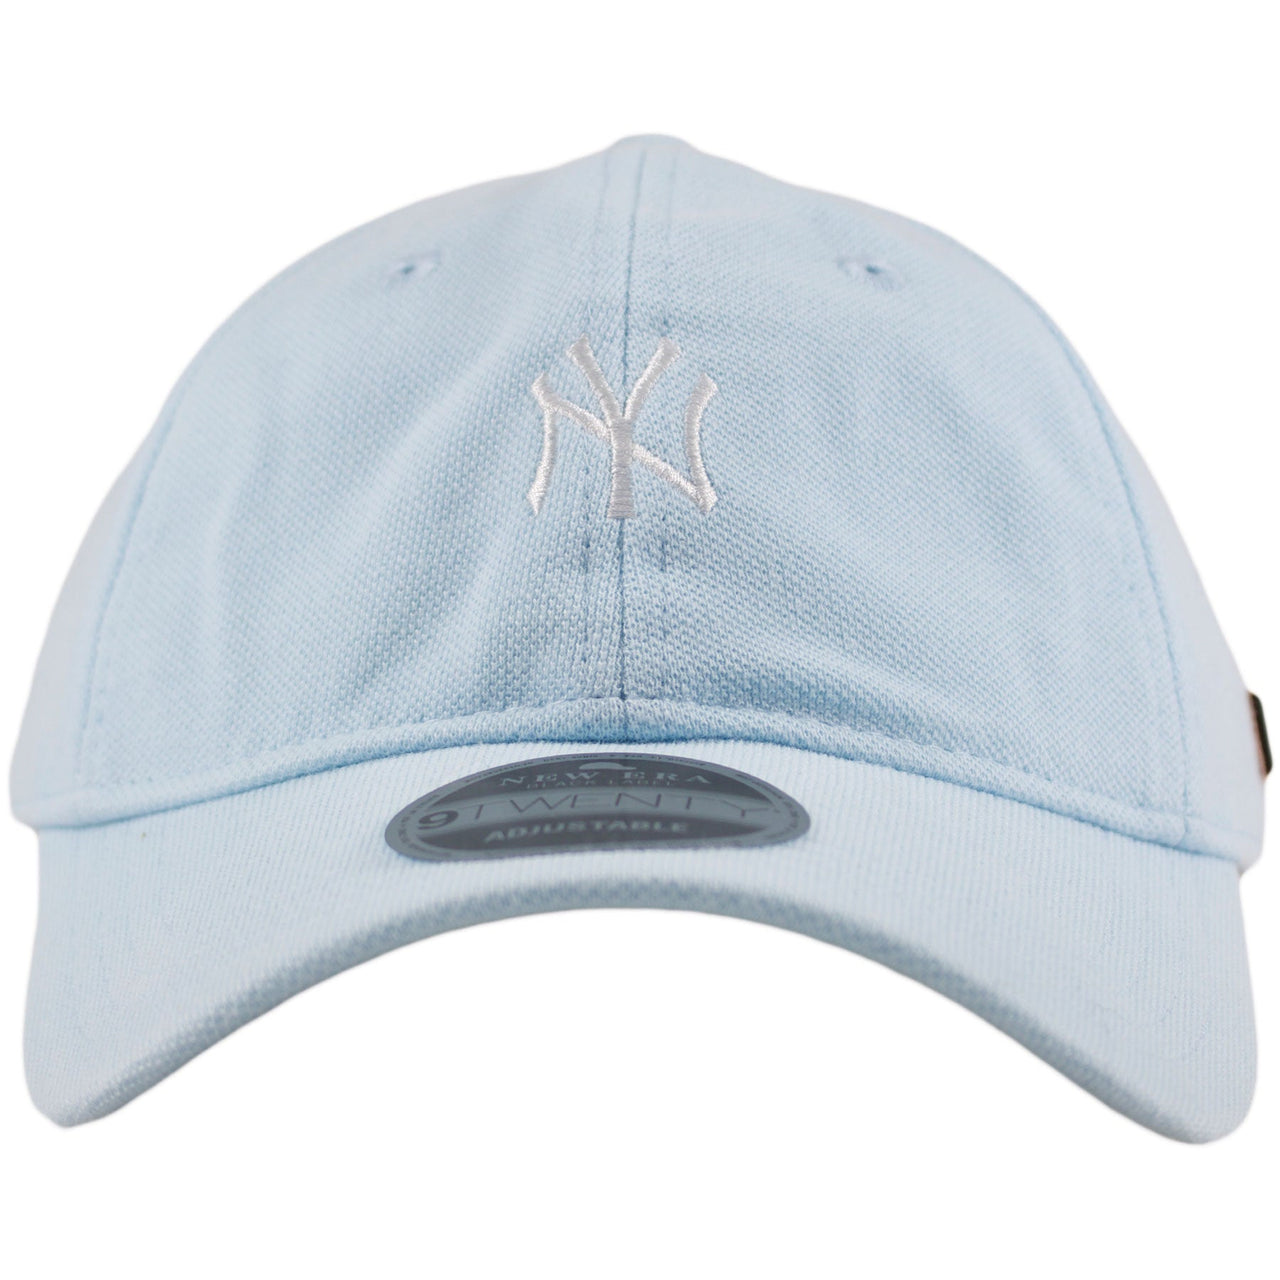 New York Yankees Black Label Micro Stitch Premium Light Blue Adjustable Dad Hat